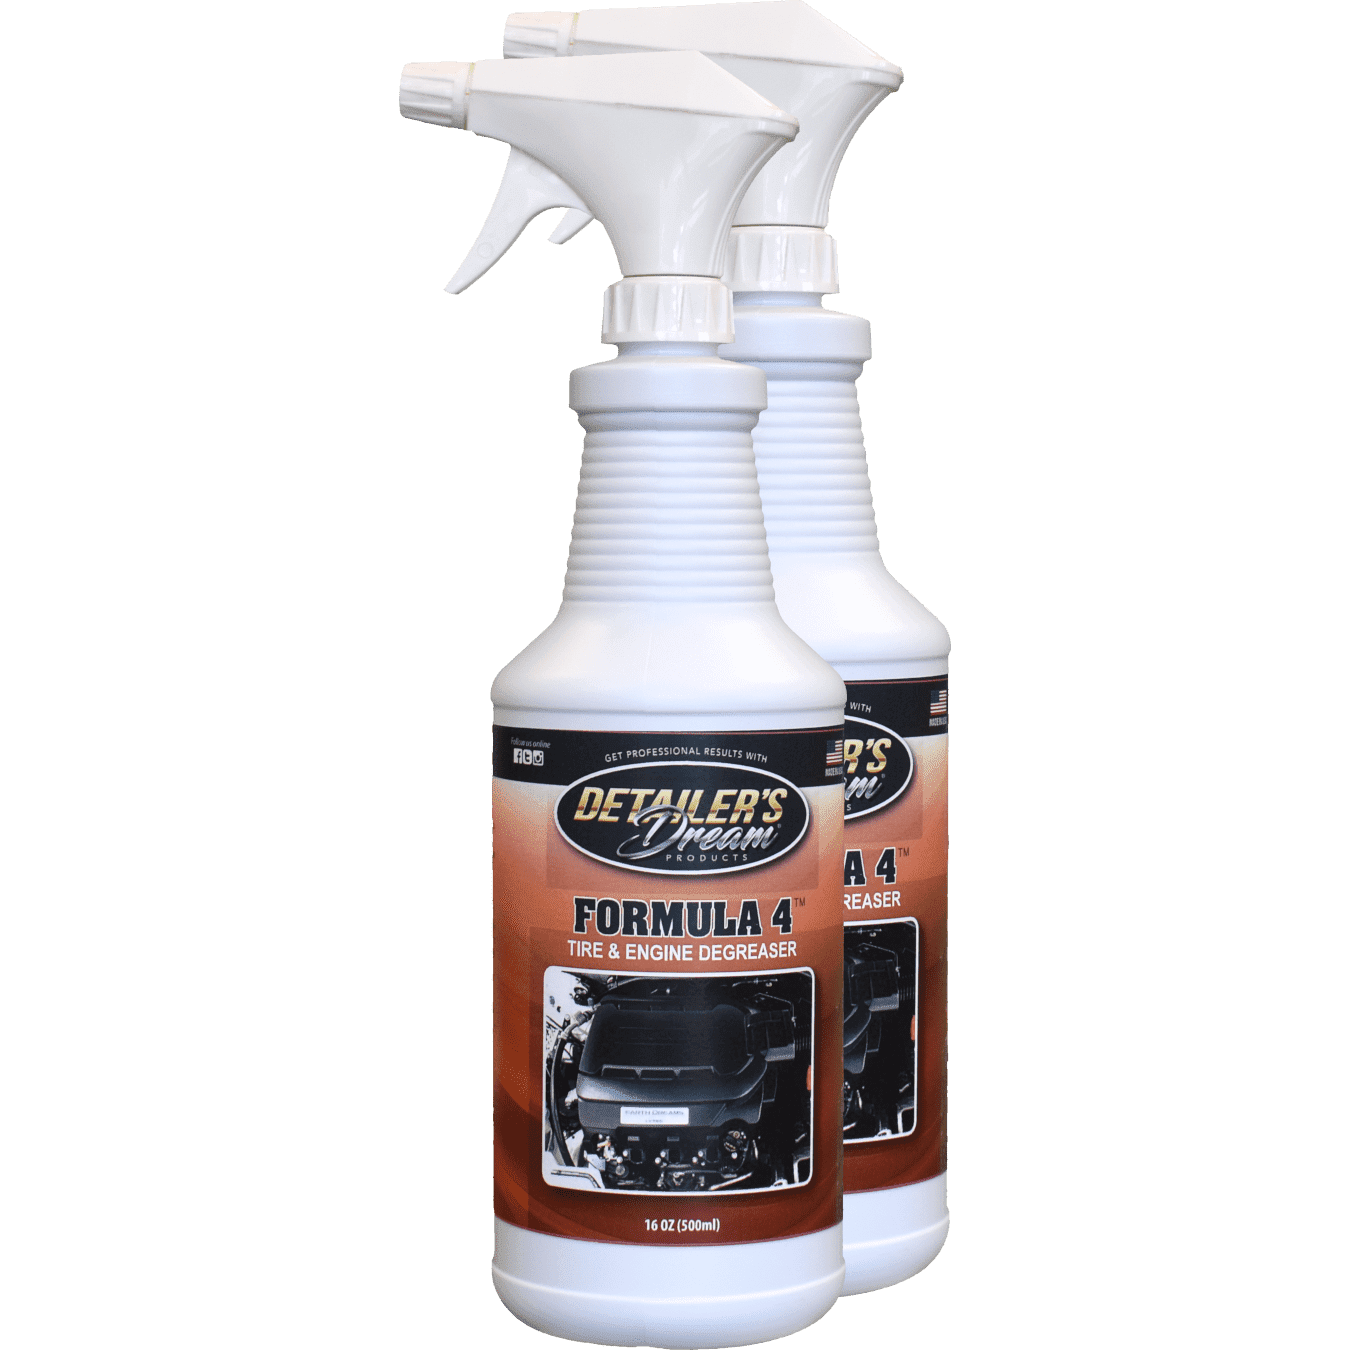 FORMULA 4™-Spray On/ Rinse Off Tire & Engine Degreaser-Detailer's Dream